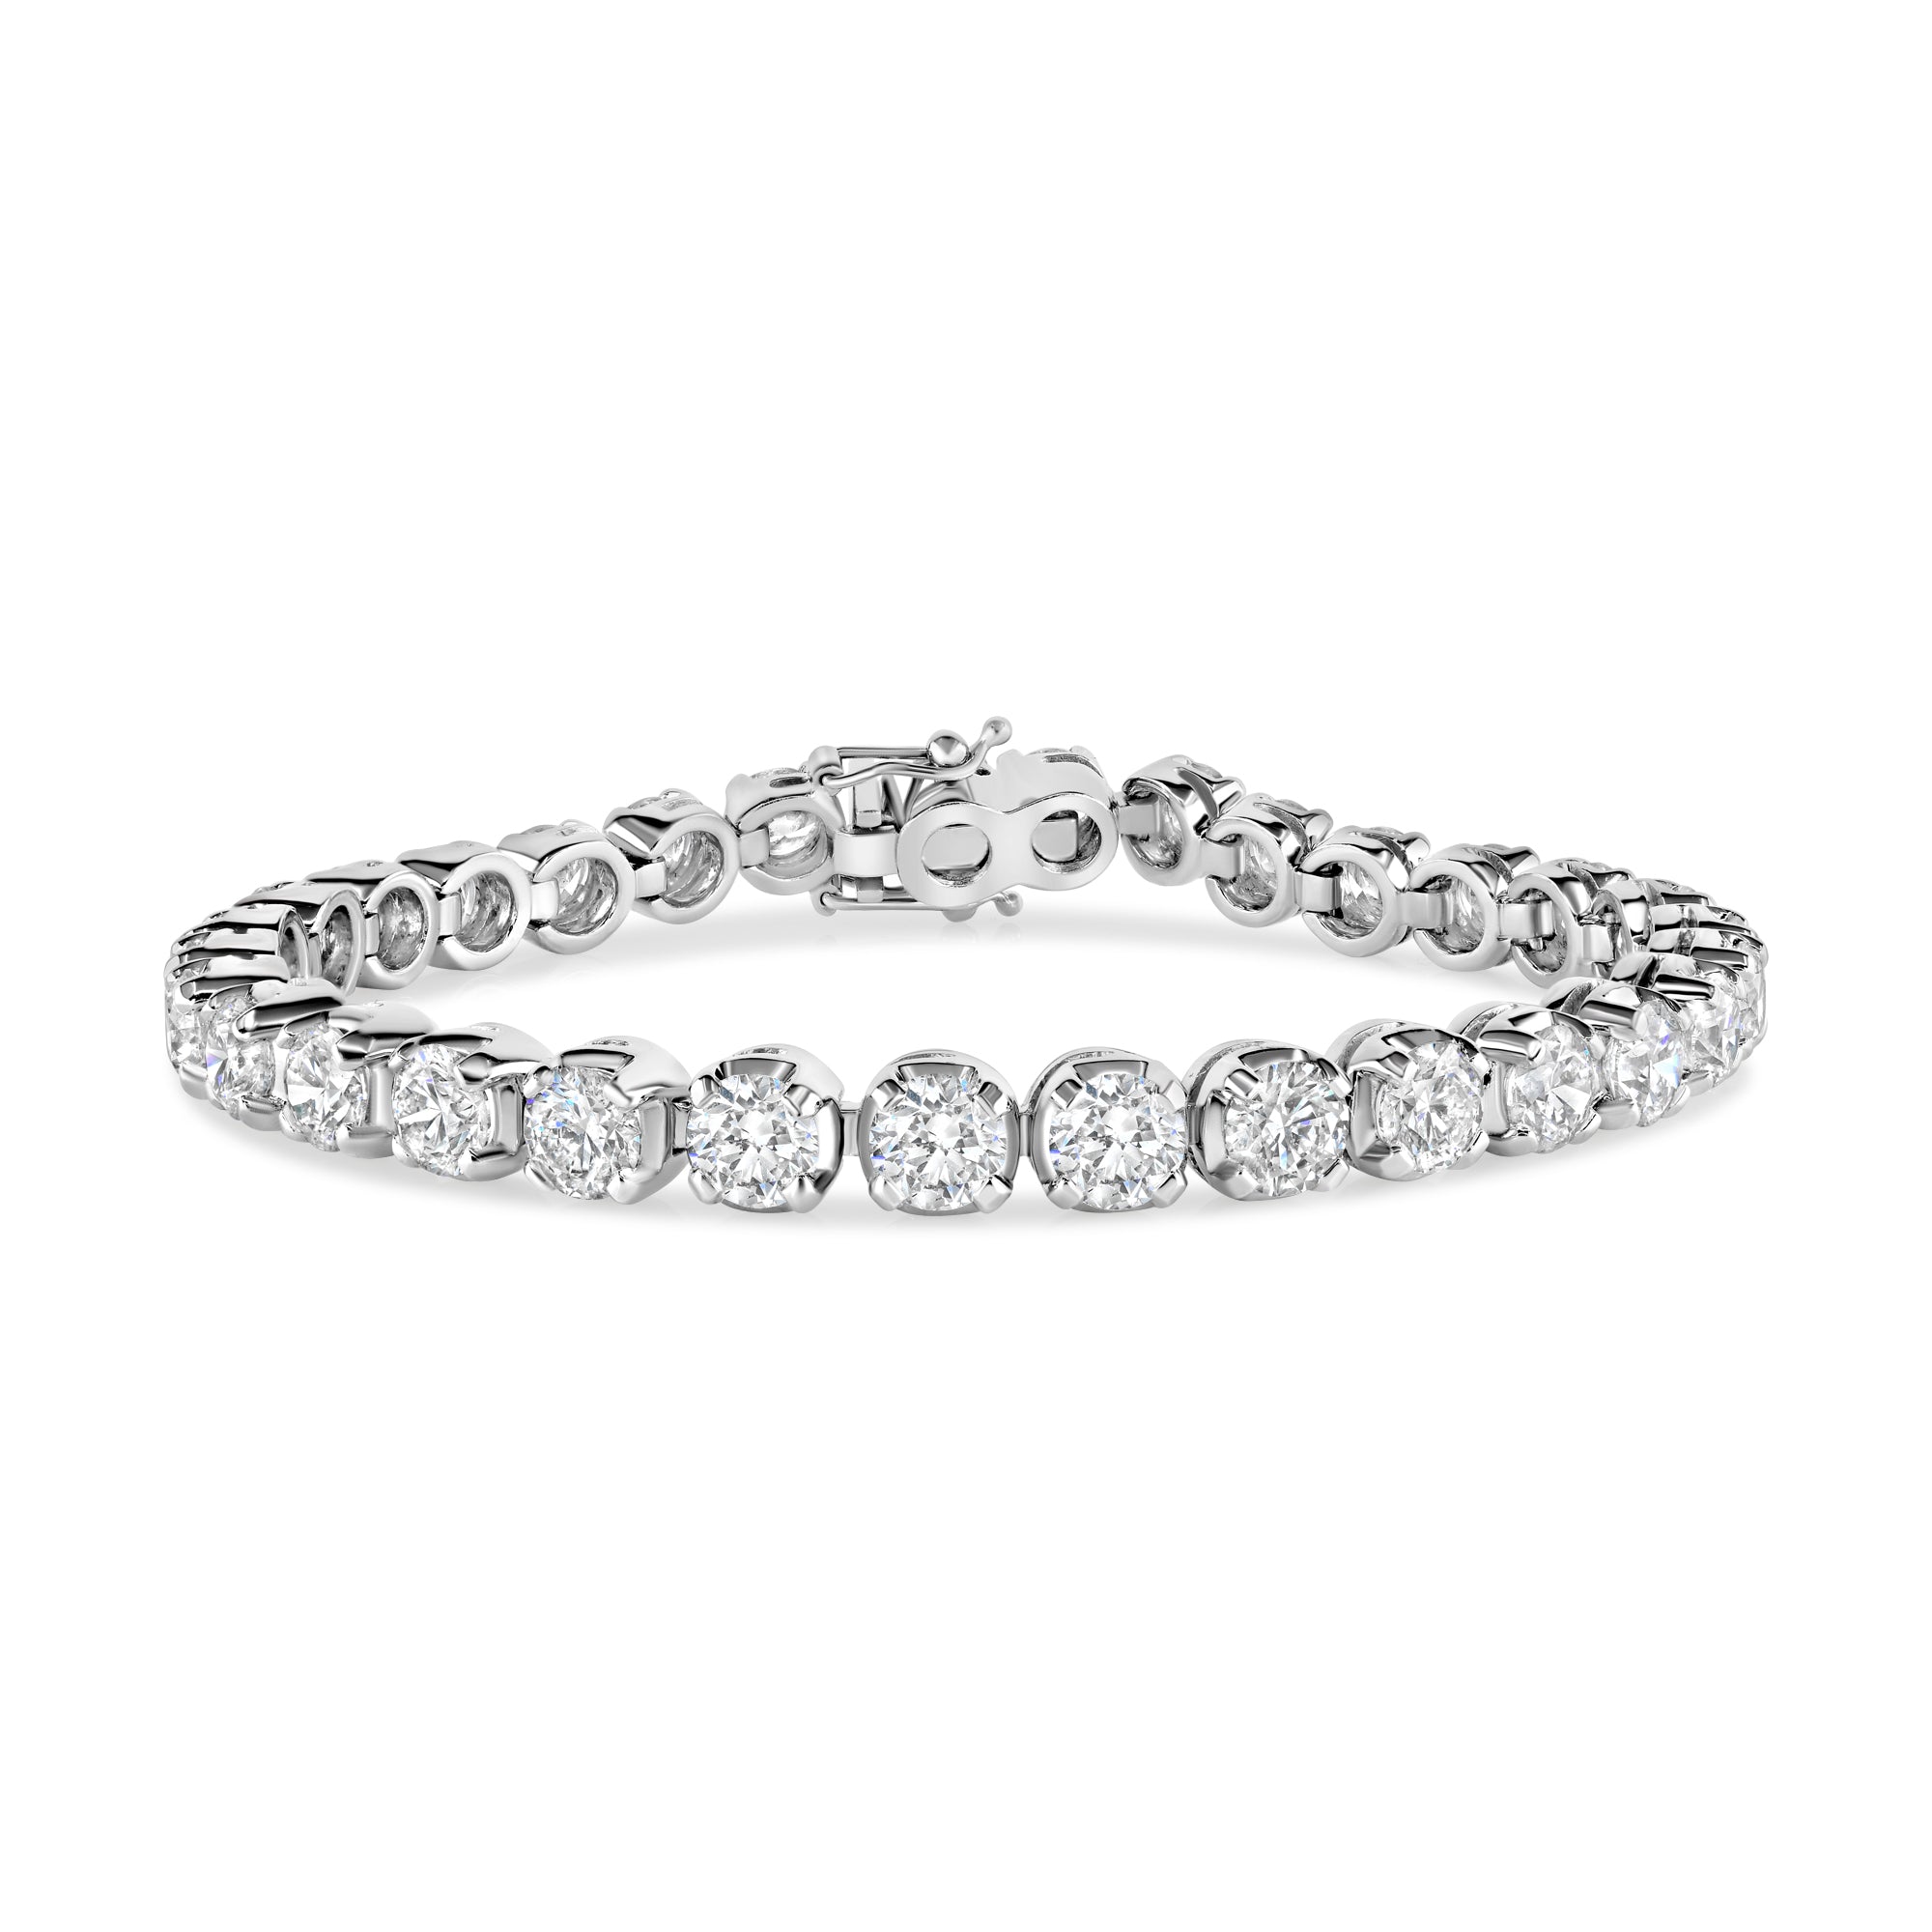 14.85ct diamond tennis bracelet set in 18ct white gold, E/F colour, VS-SI clarity, IGI certified